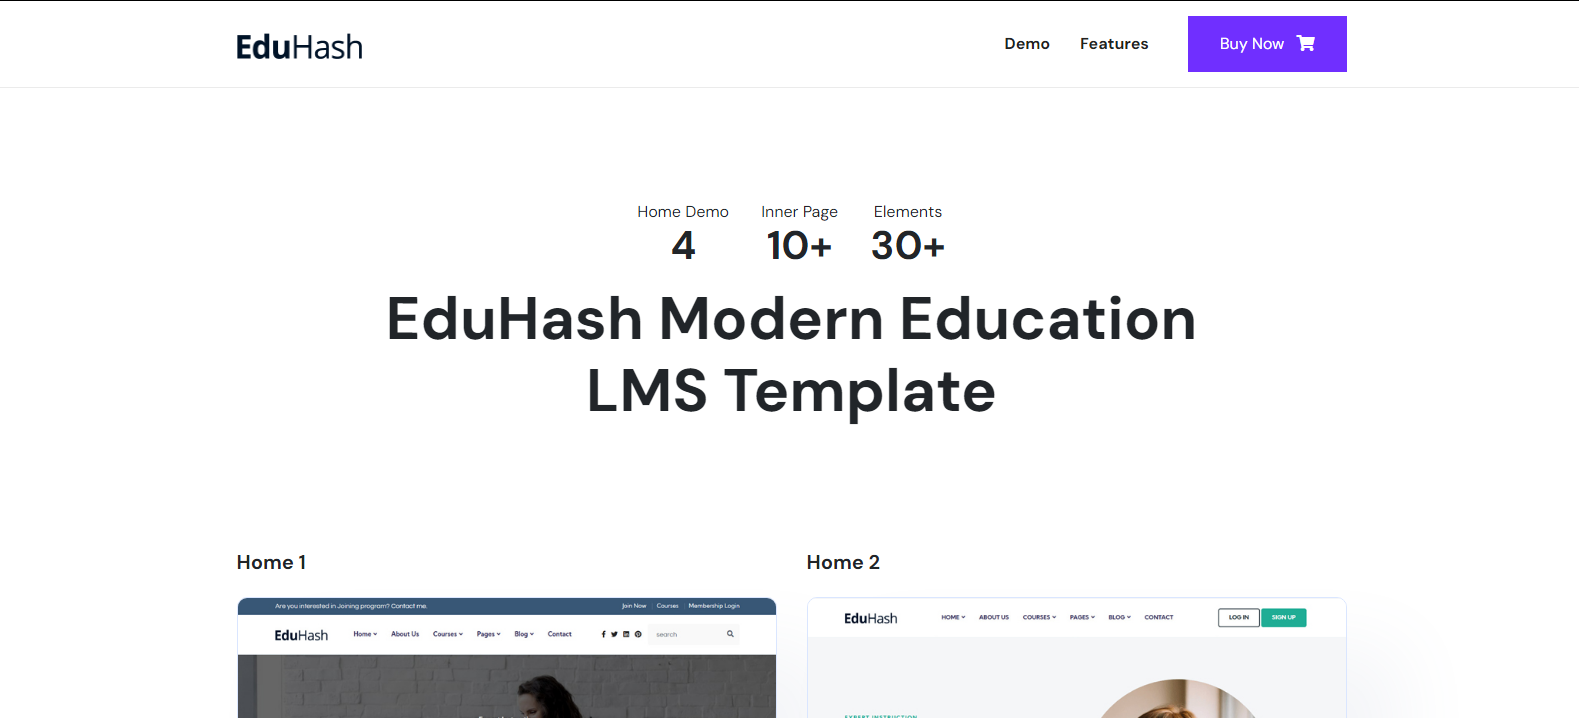 EduHash - Education LMS Template